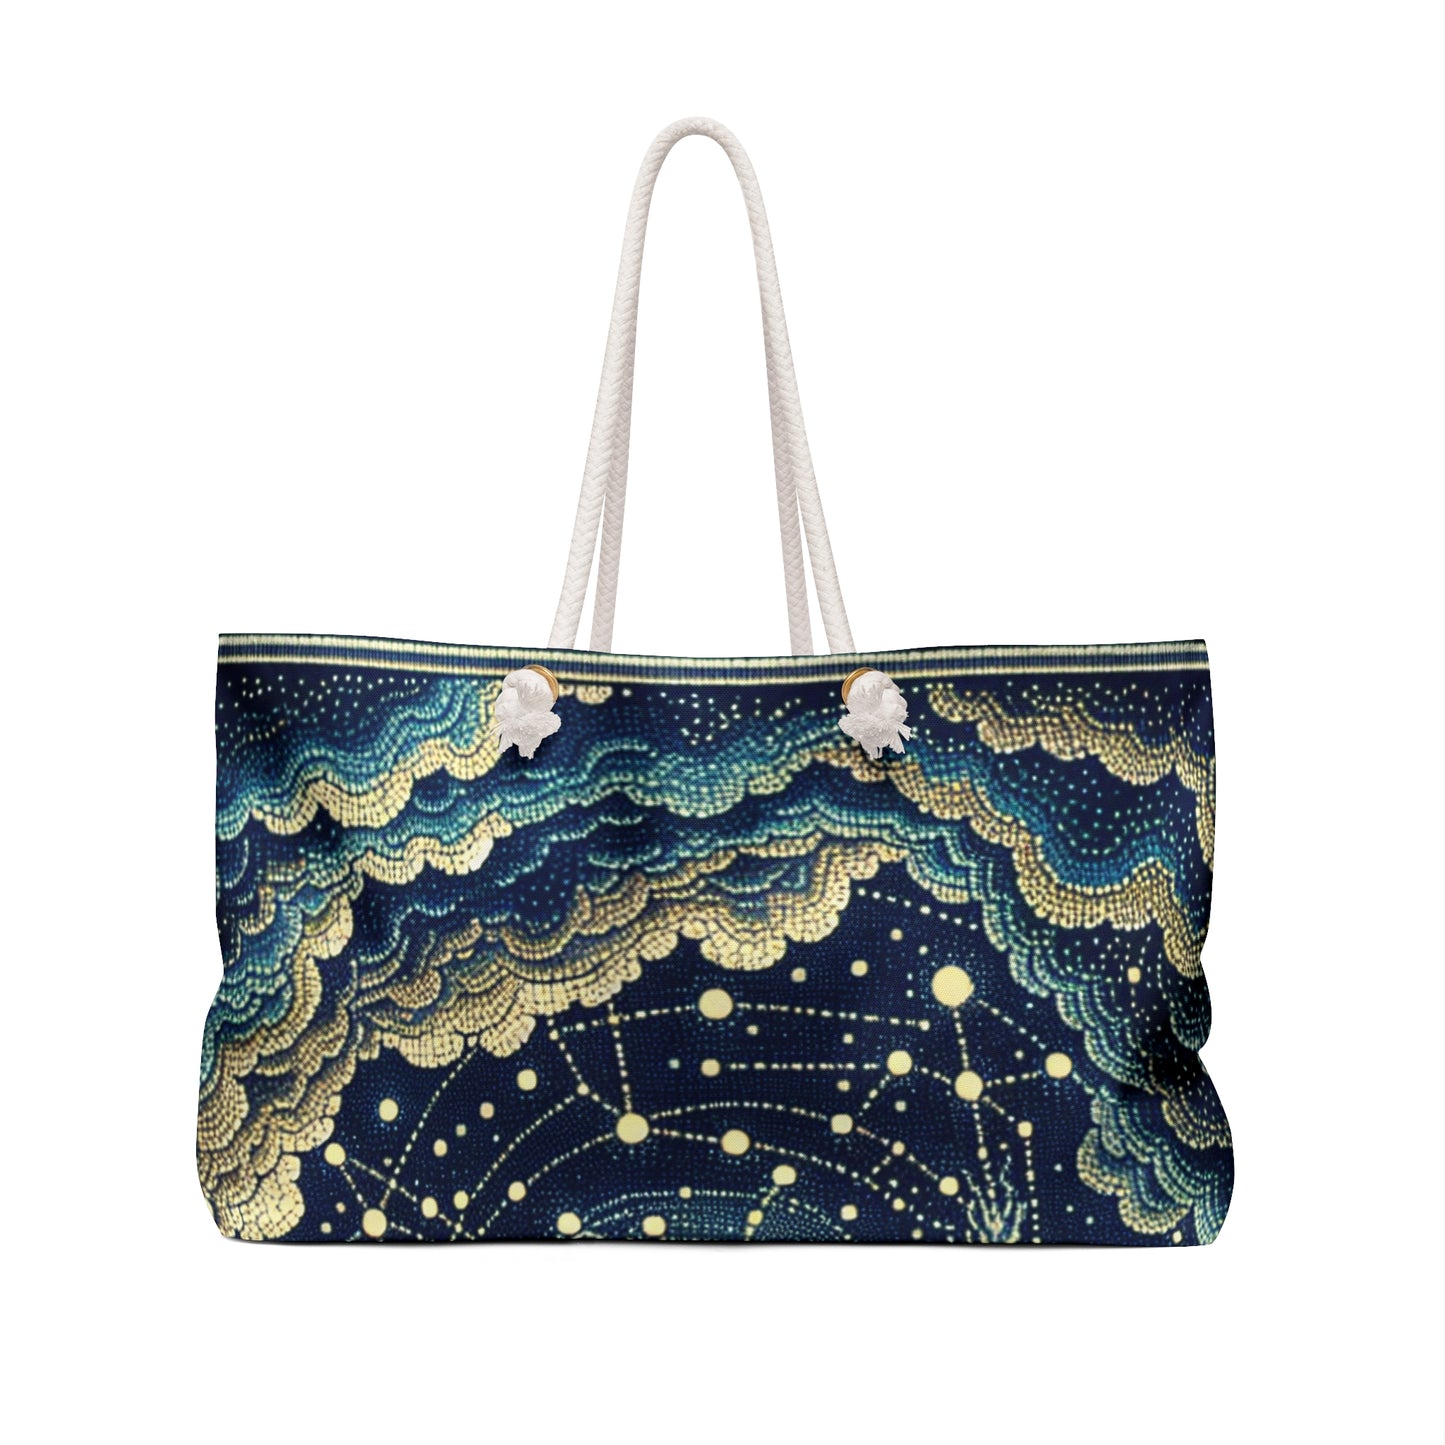 "Dotting the Heavens" - The Alien Weekender Bag Pointillism Style